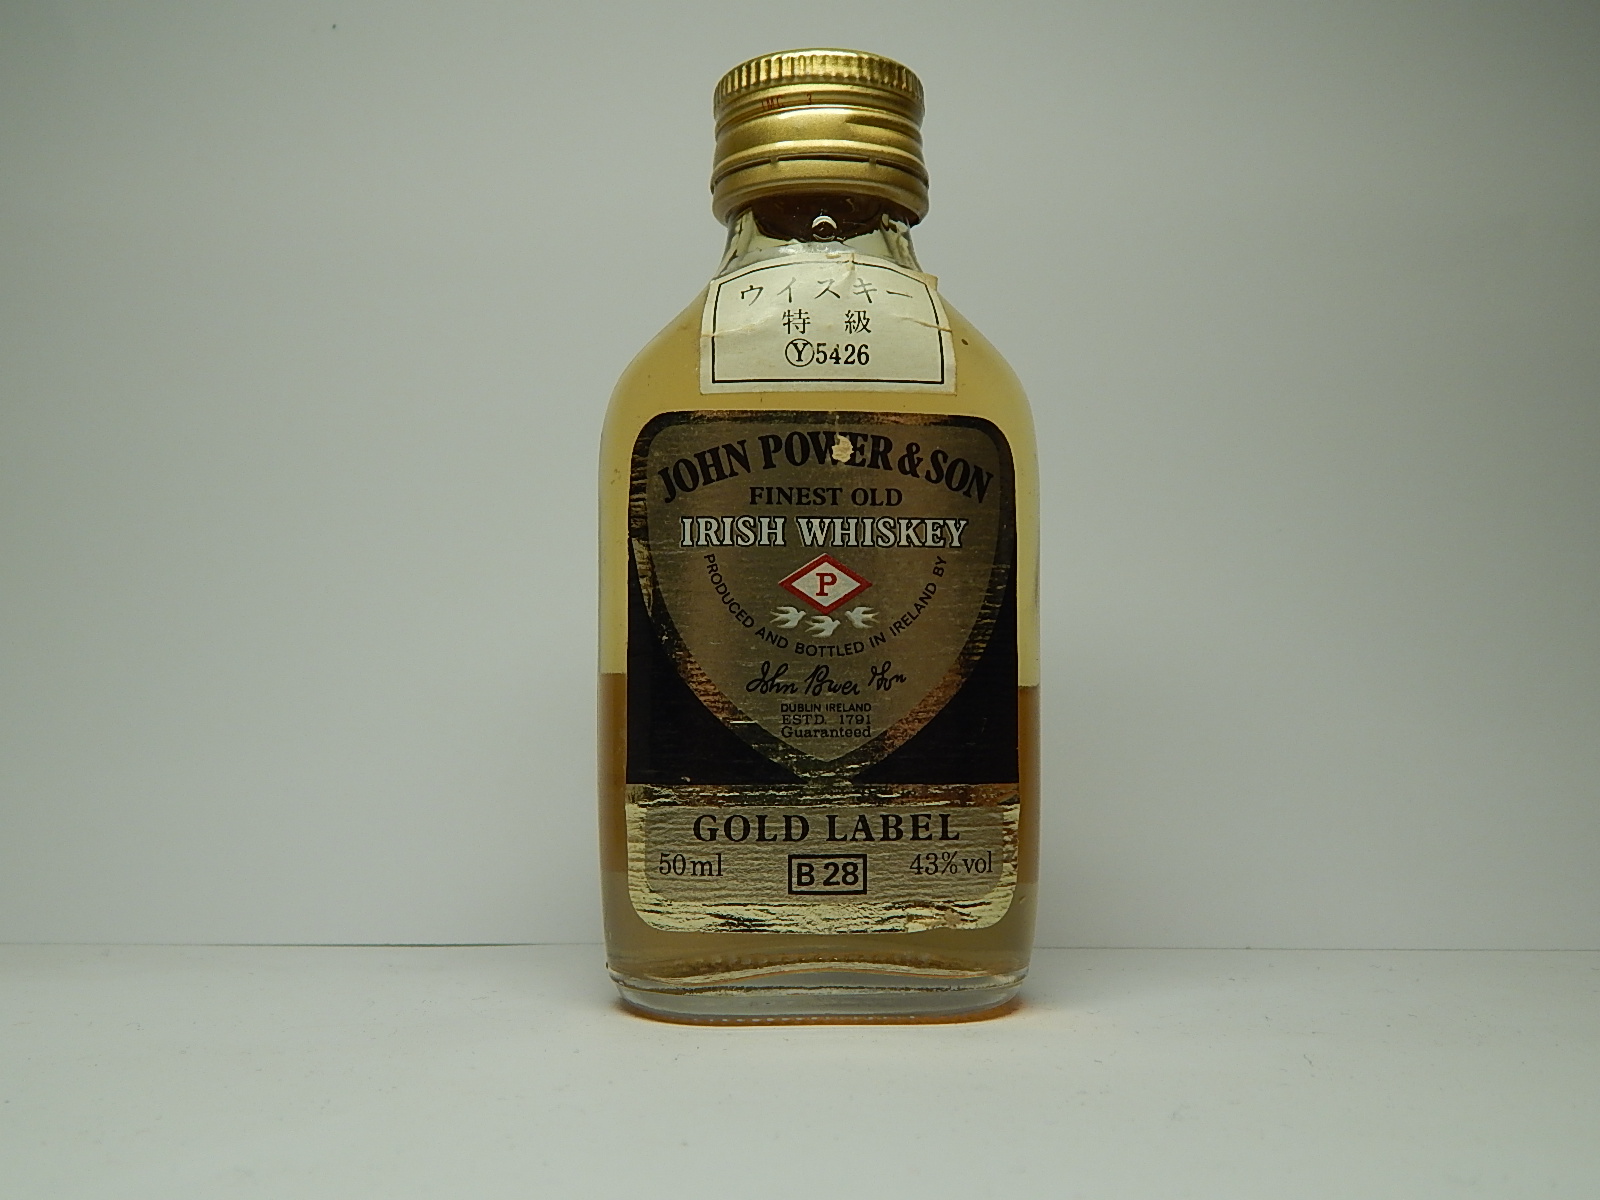 GOLD LABEL Finest Old Irish Whiskey "Japan"